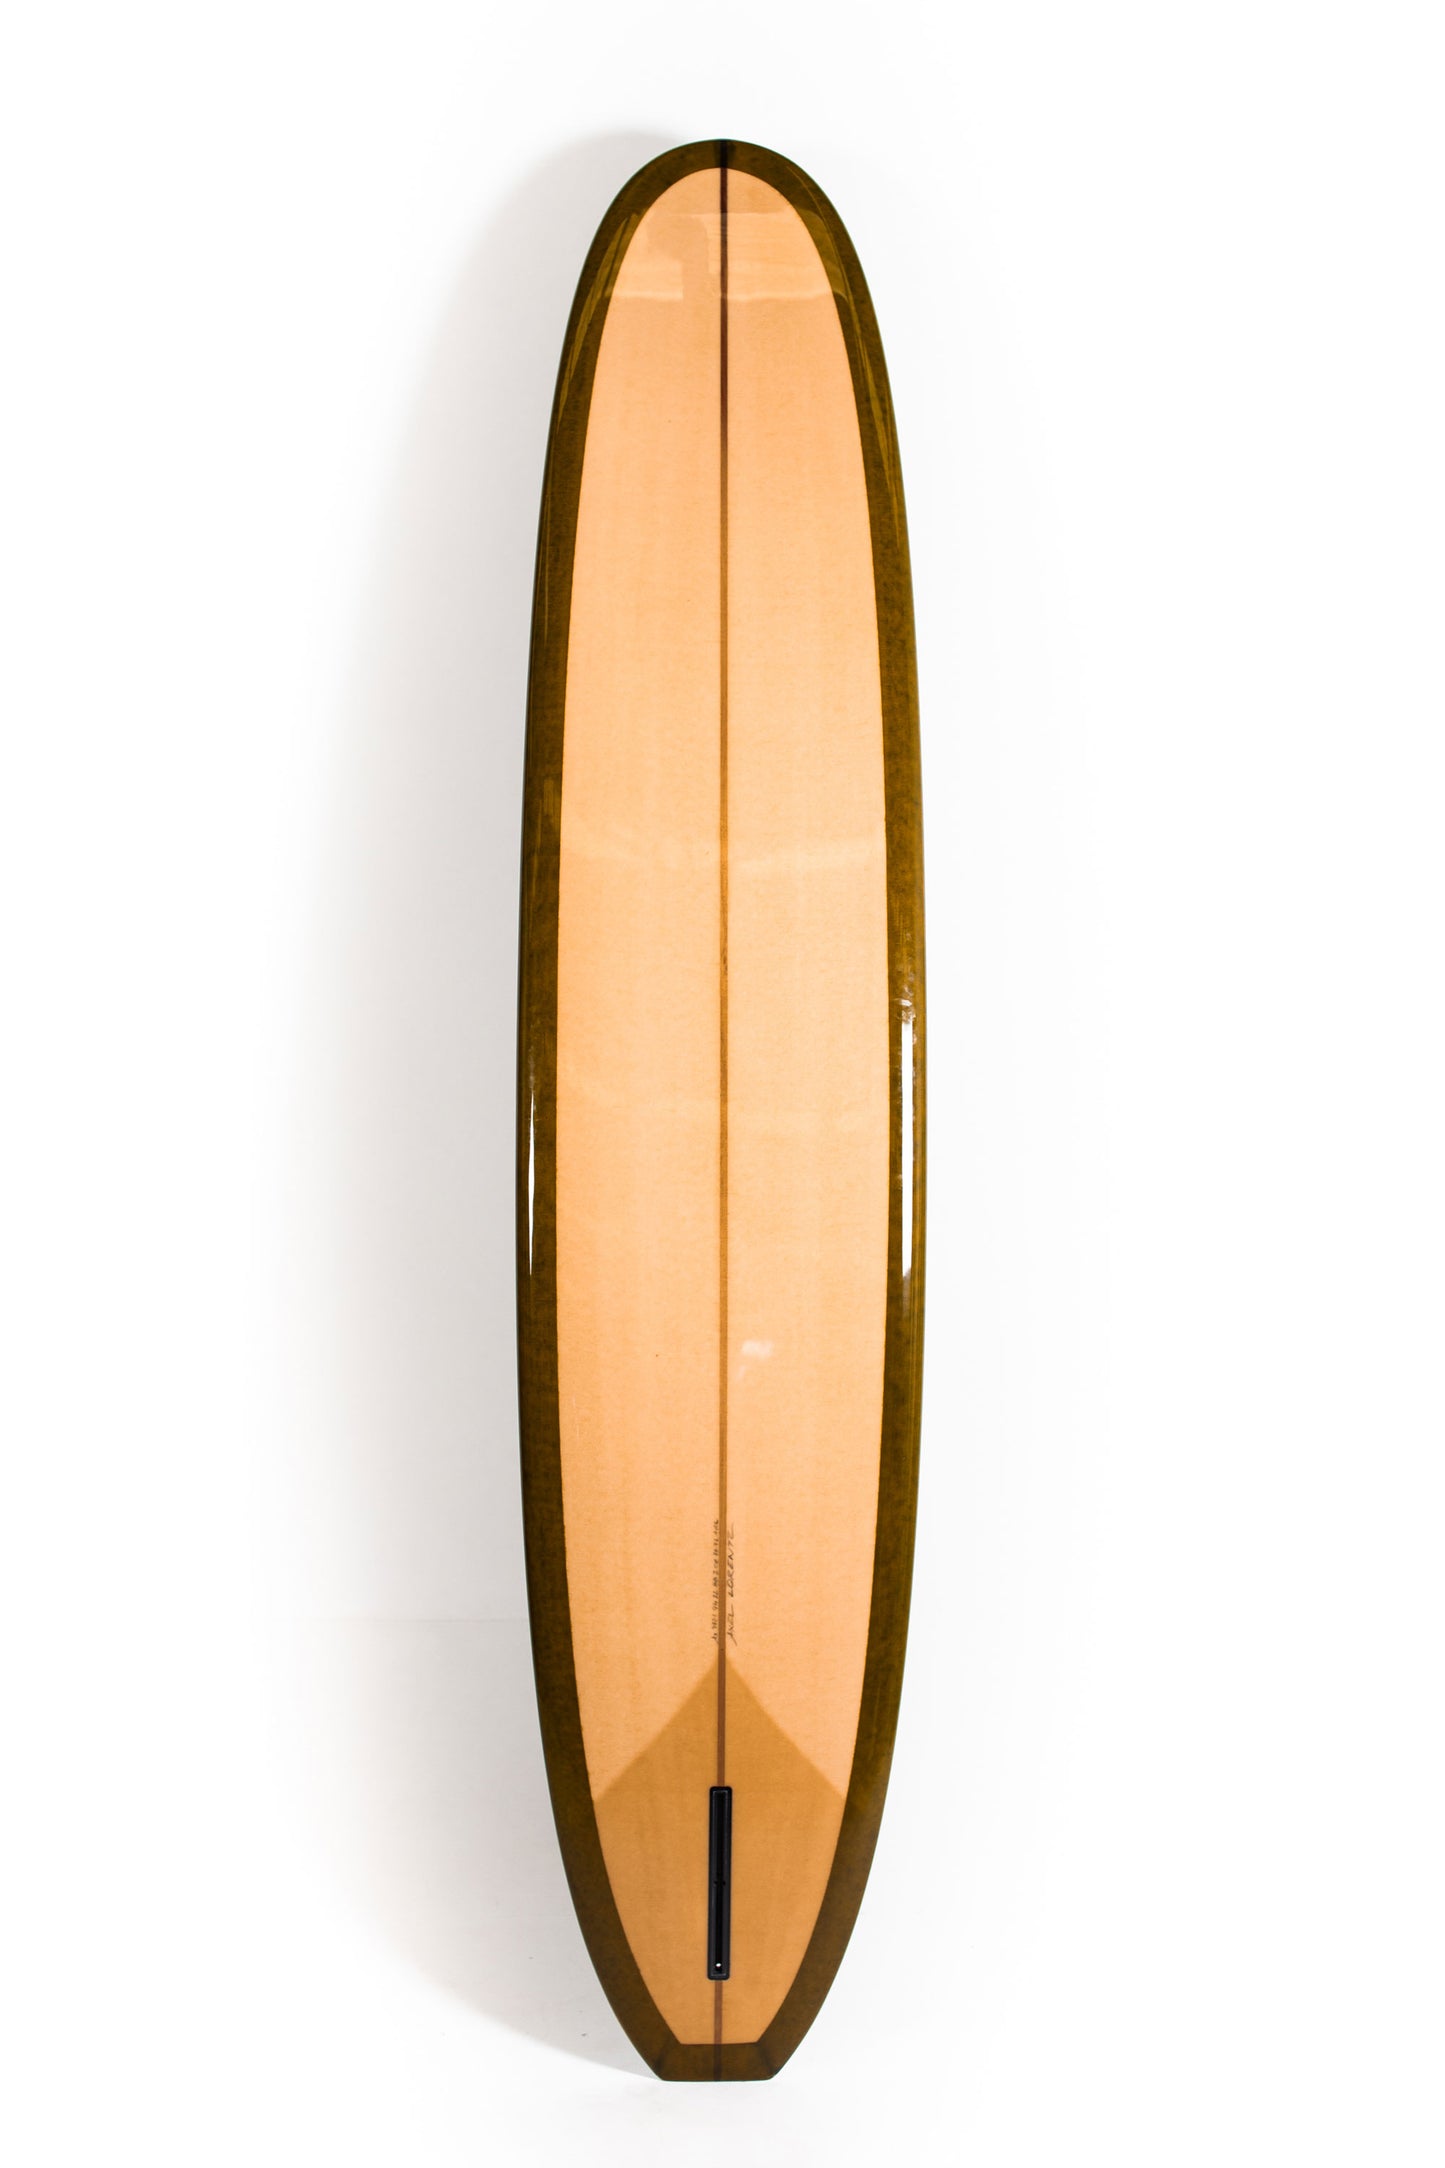 Pukas Surf Shop - Pukas Surfboards - MAYFLOWER by Axel Lorentz -  9'4" x 22,88 x 3,06 x 78.71L - AX09731